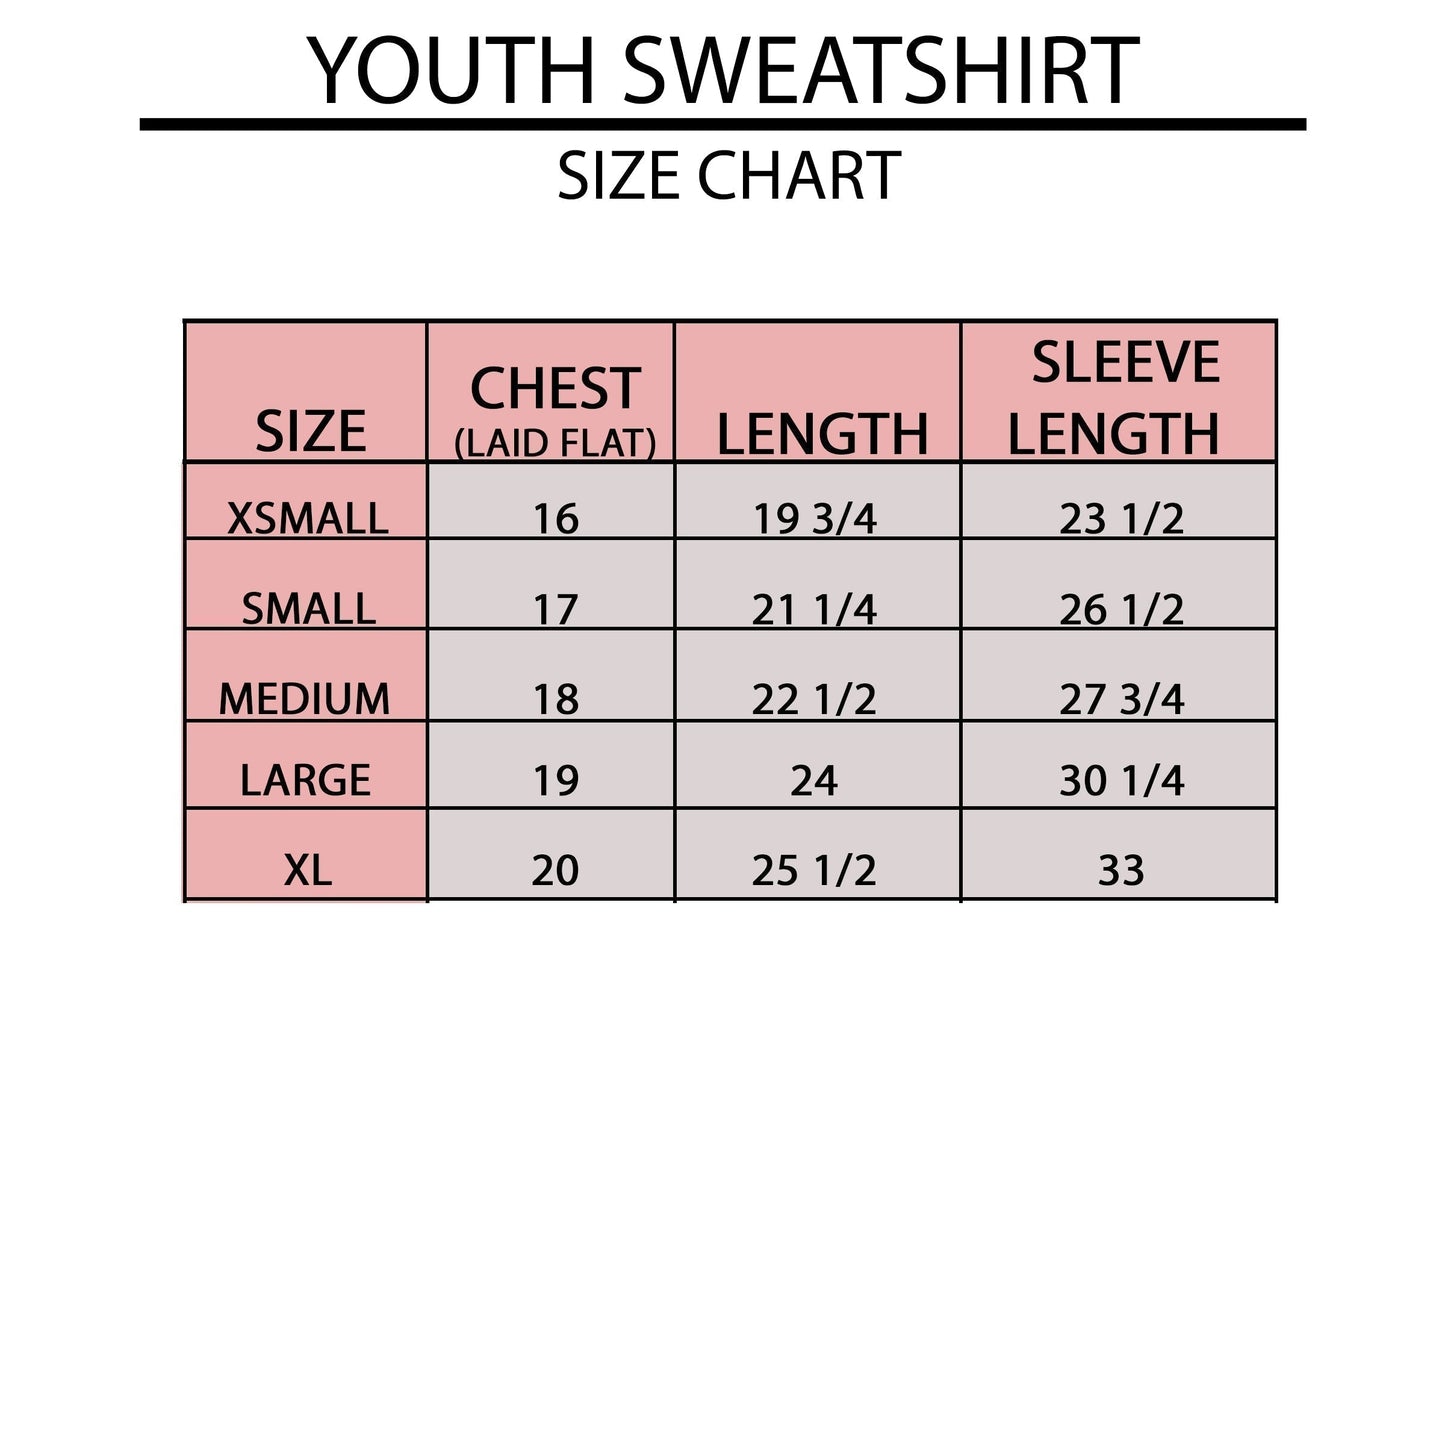 Camp Crew Camper | Youth Sweatshirt